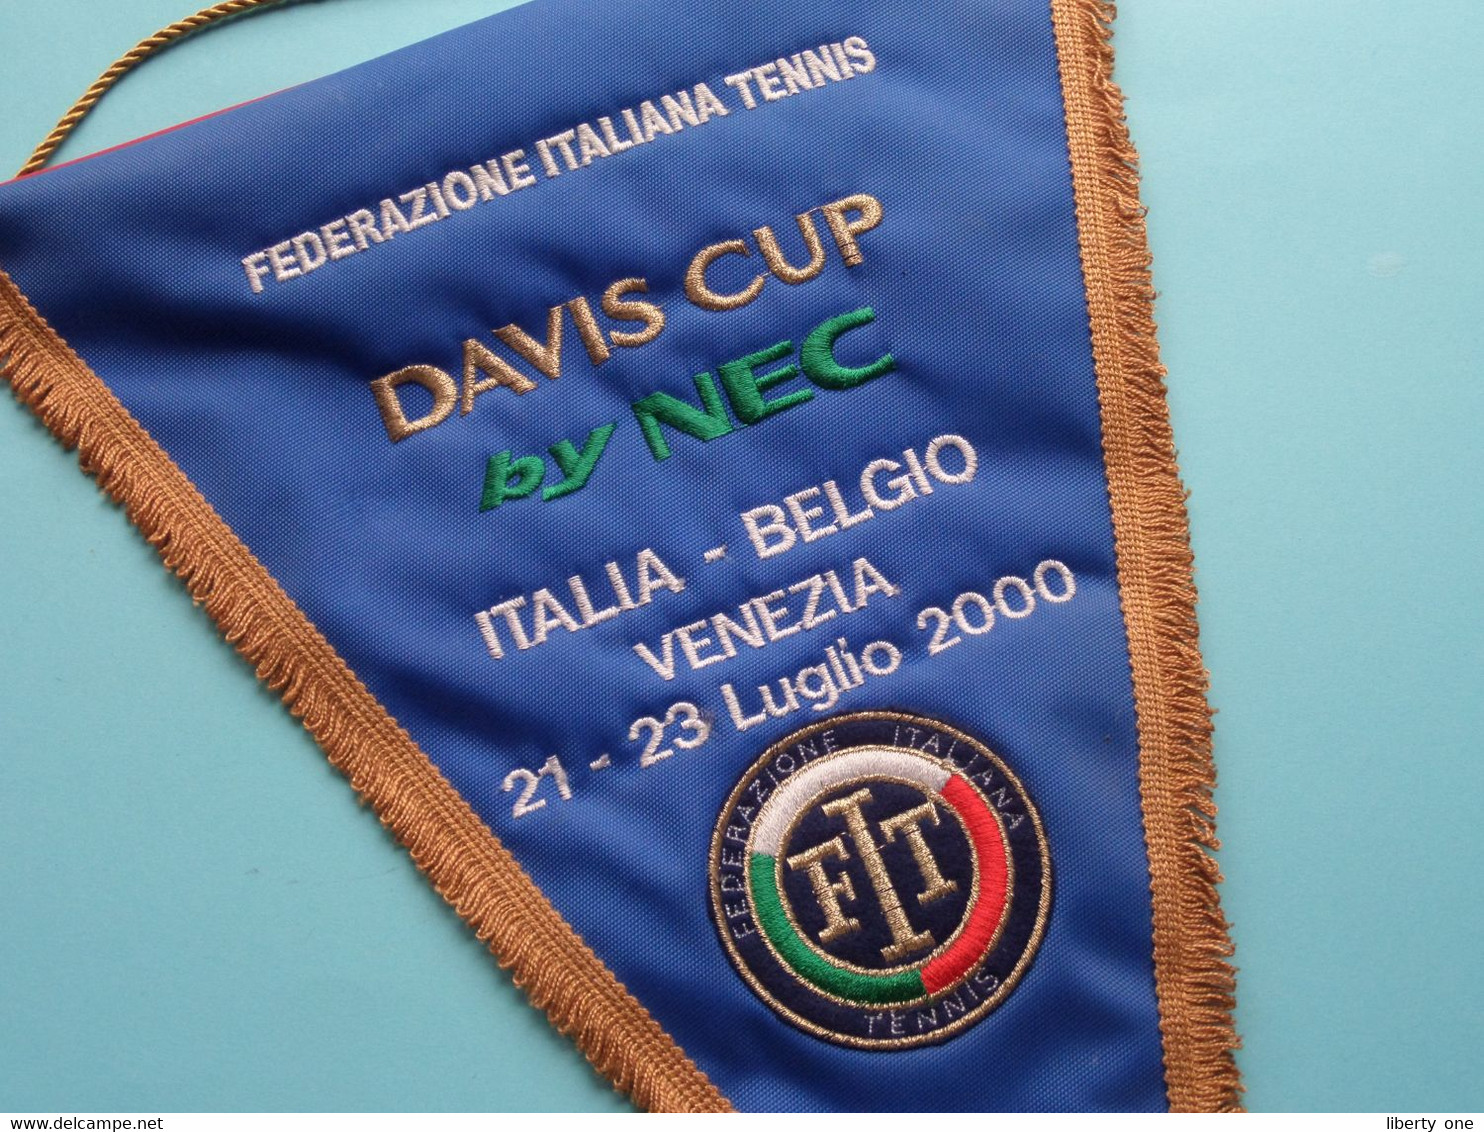 Federazione ITALIANA Tennis DAVIS CUP By NEC - ITALIA / BELGIO - 2000 ( See / Voir SCAN ) Wimpel - Pennant - Fanion ! - Habillement, Souvenirs & Autres